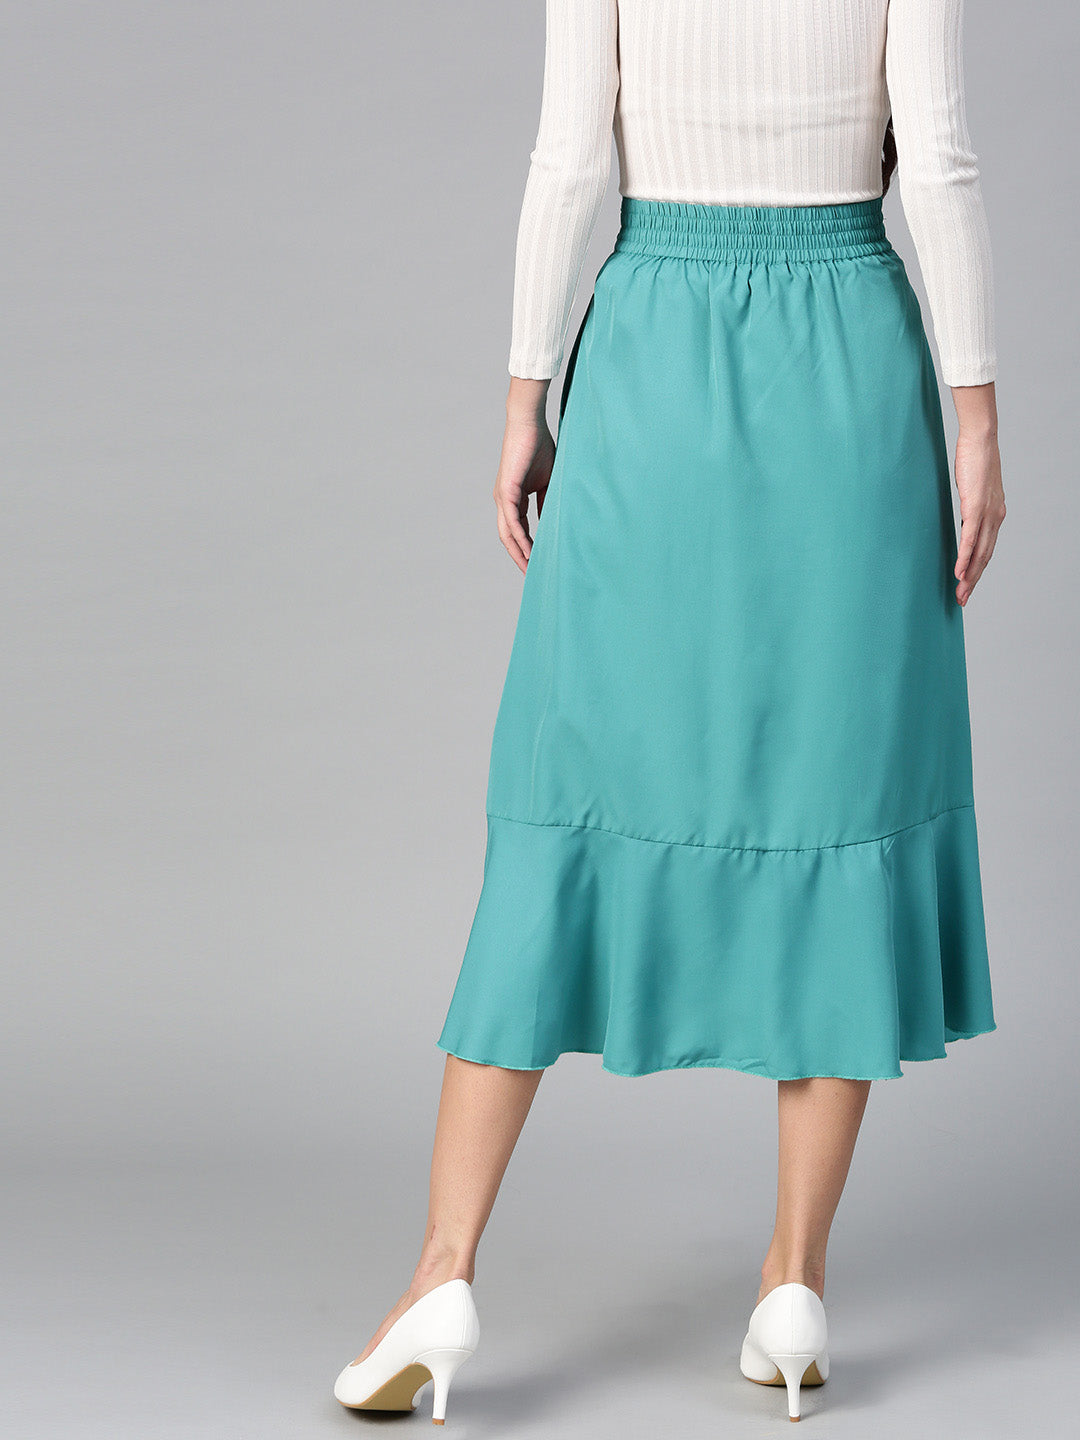 Teal Green A Line With Front Slit Skirt (Sku- BLMG12813).